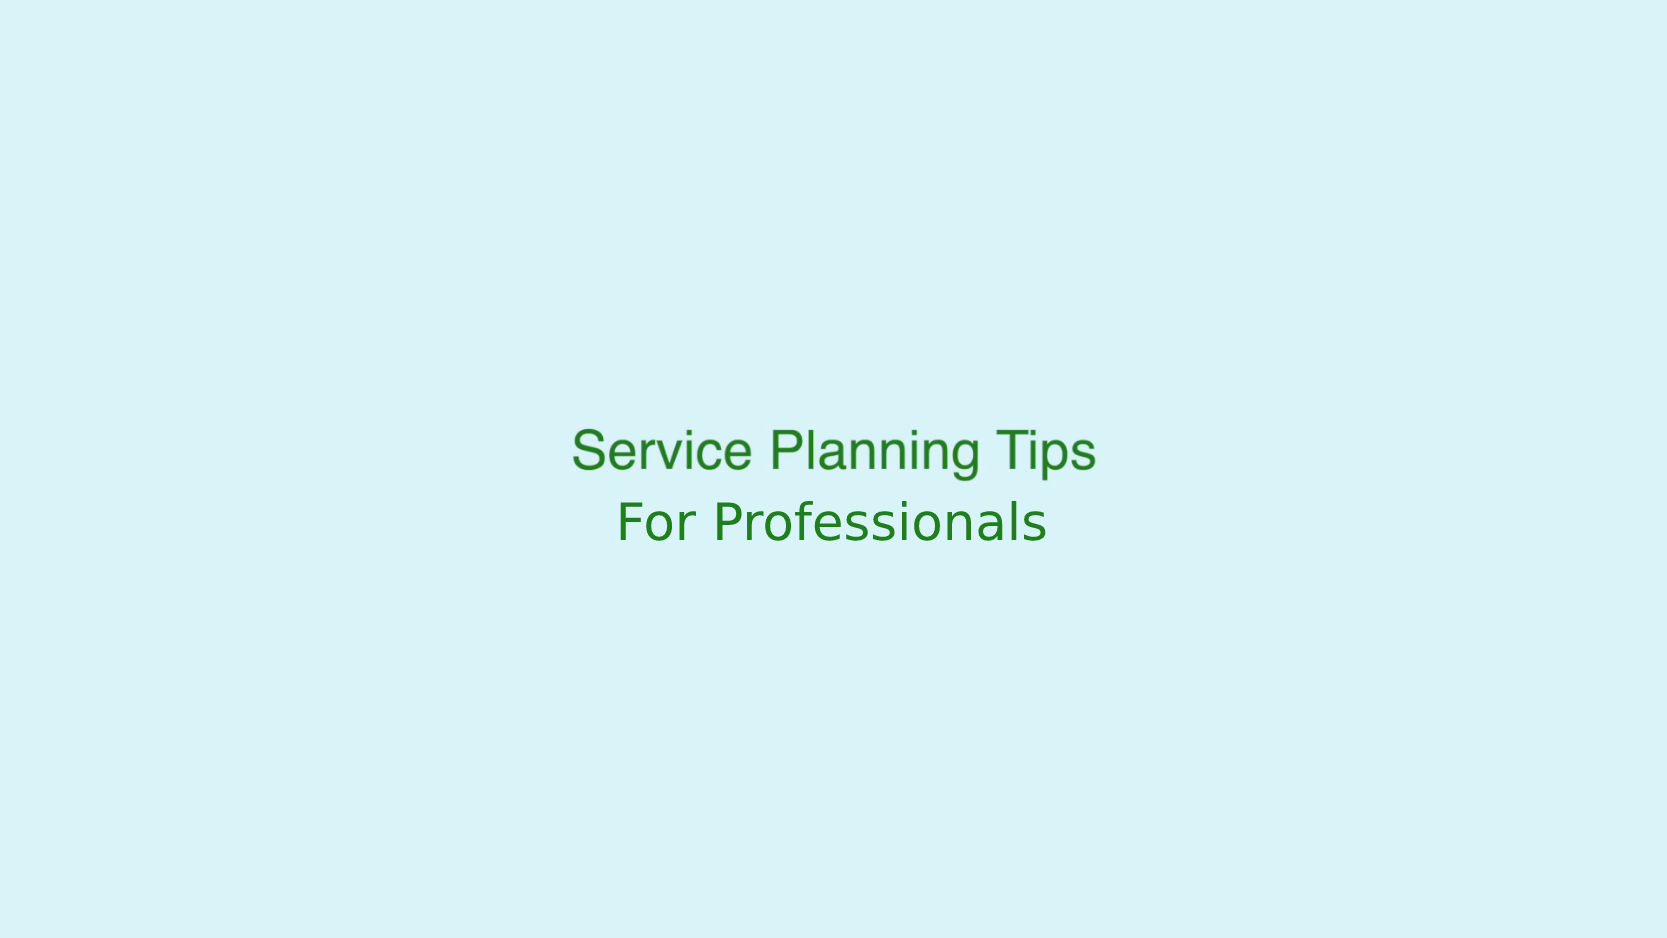 Service Planning Tips For Professionals Video Splash Image